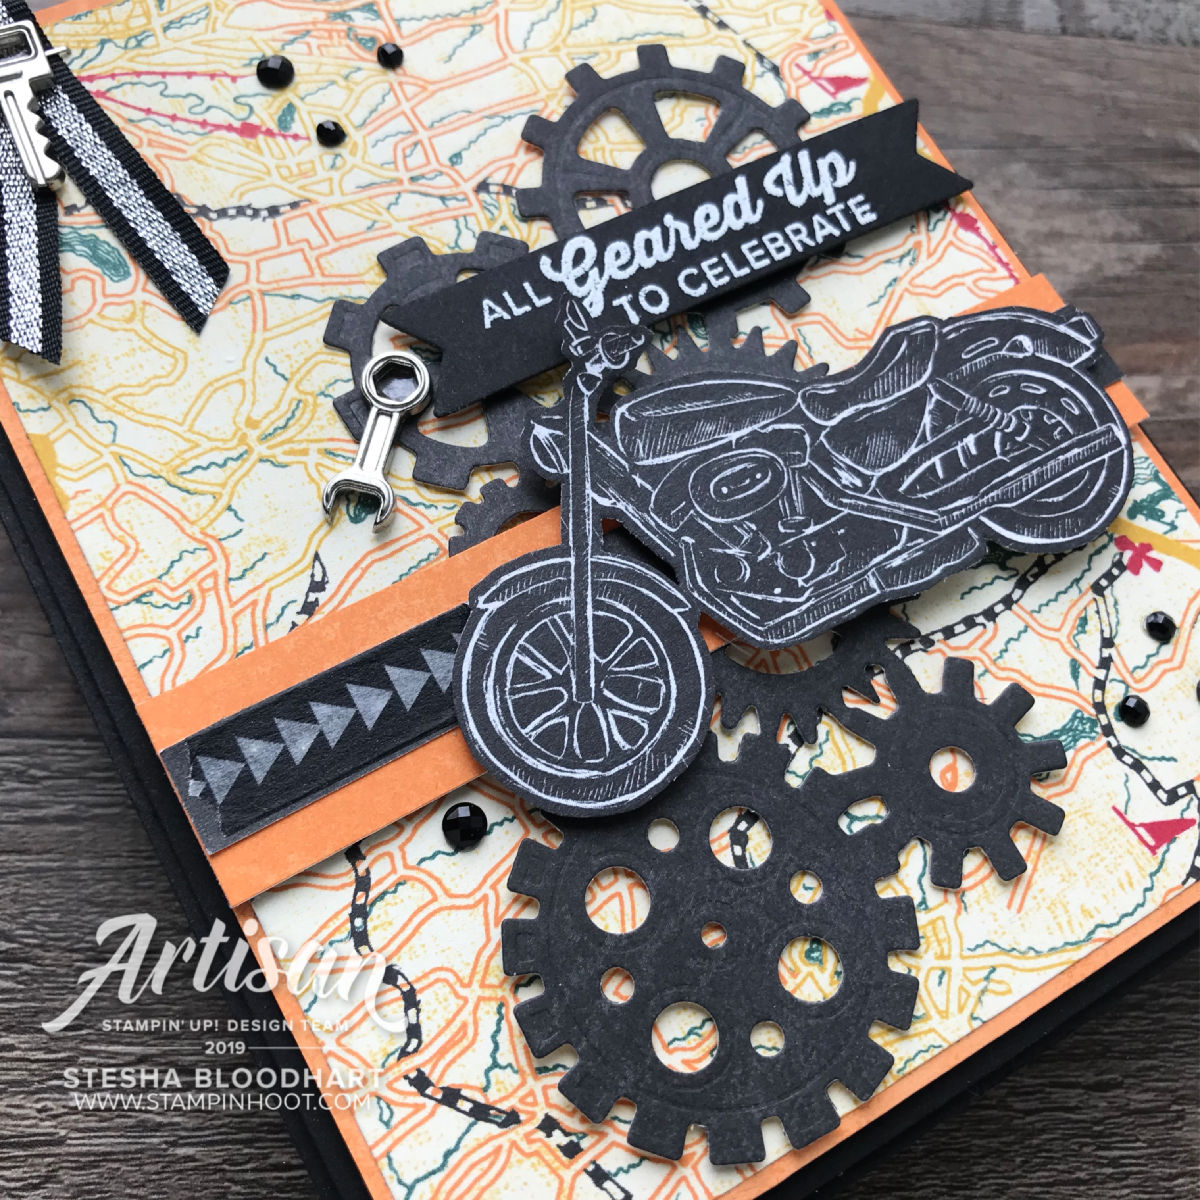 Garage Gears 2019 Artisan Design Stesha Bloodhart Best Dad Handmade Card